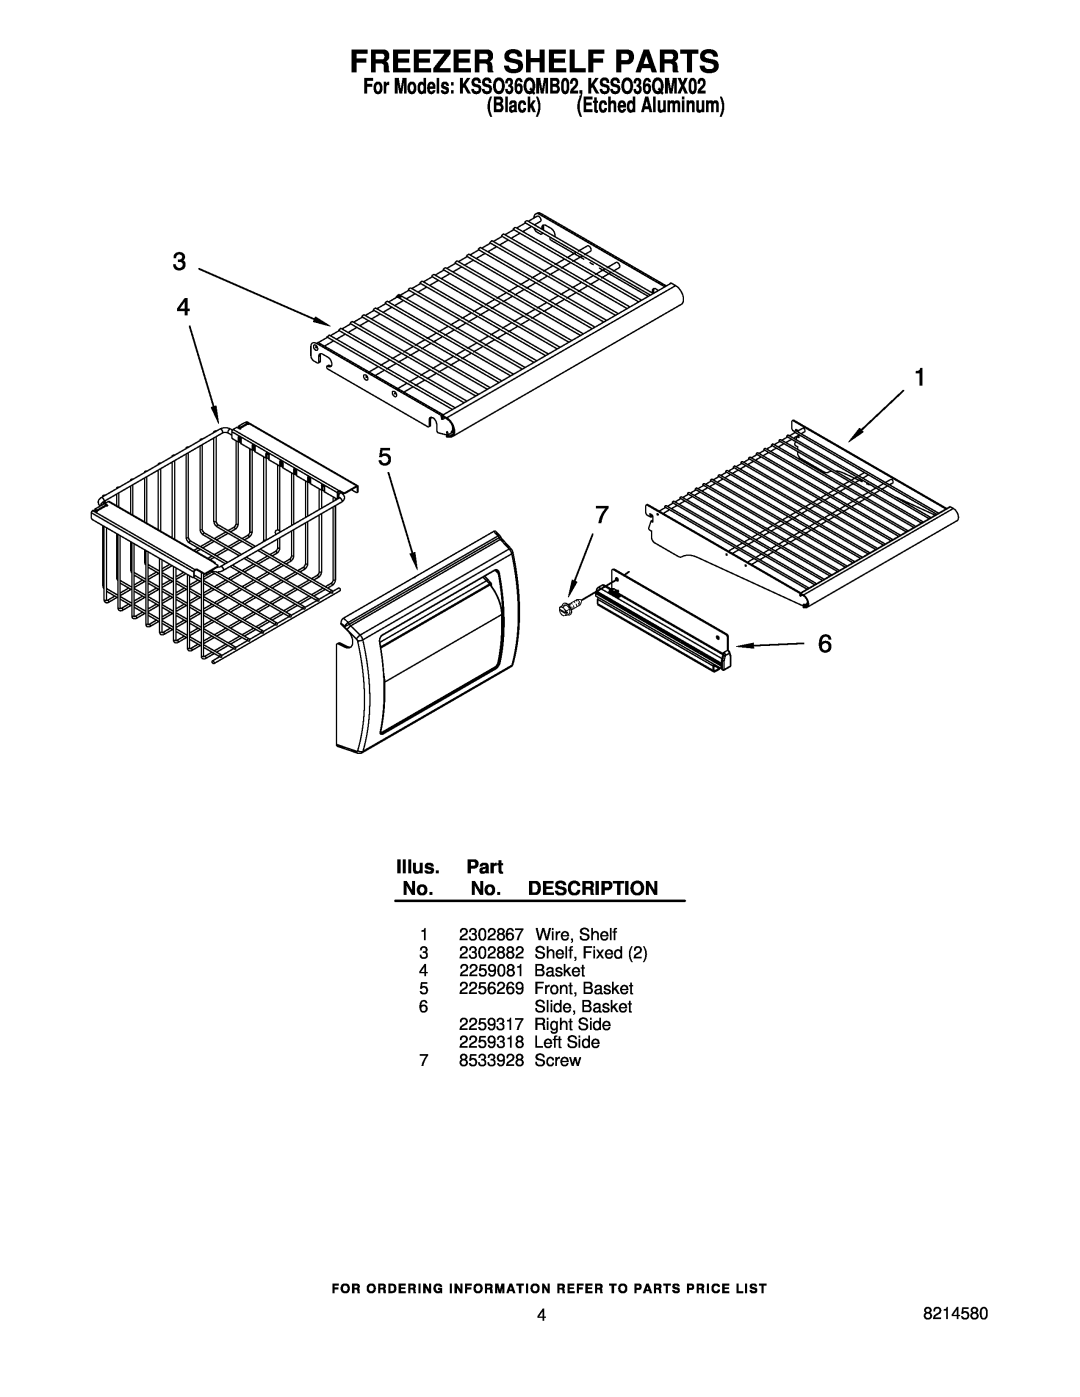 KitchenAid manual Freezer Shelf Parts, For Models KSSO36QMB02, KSSO36QMX02, Black, Illus. Part No. No. DESCRIPTION 